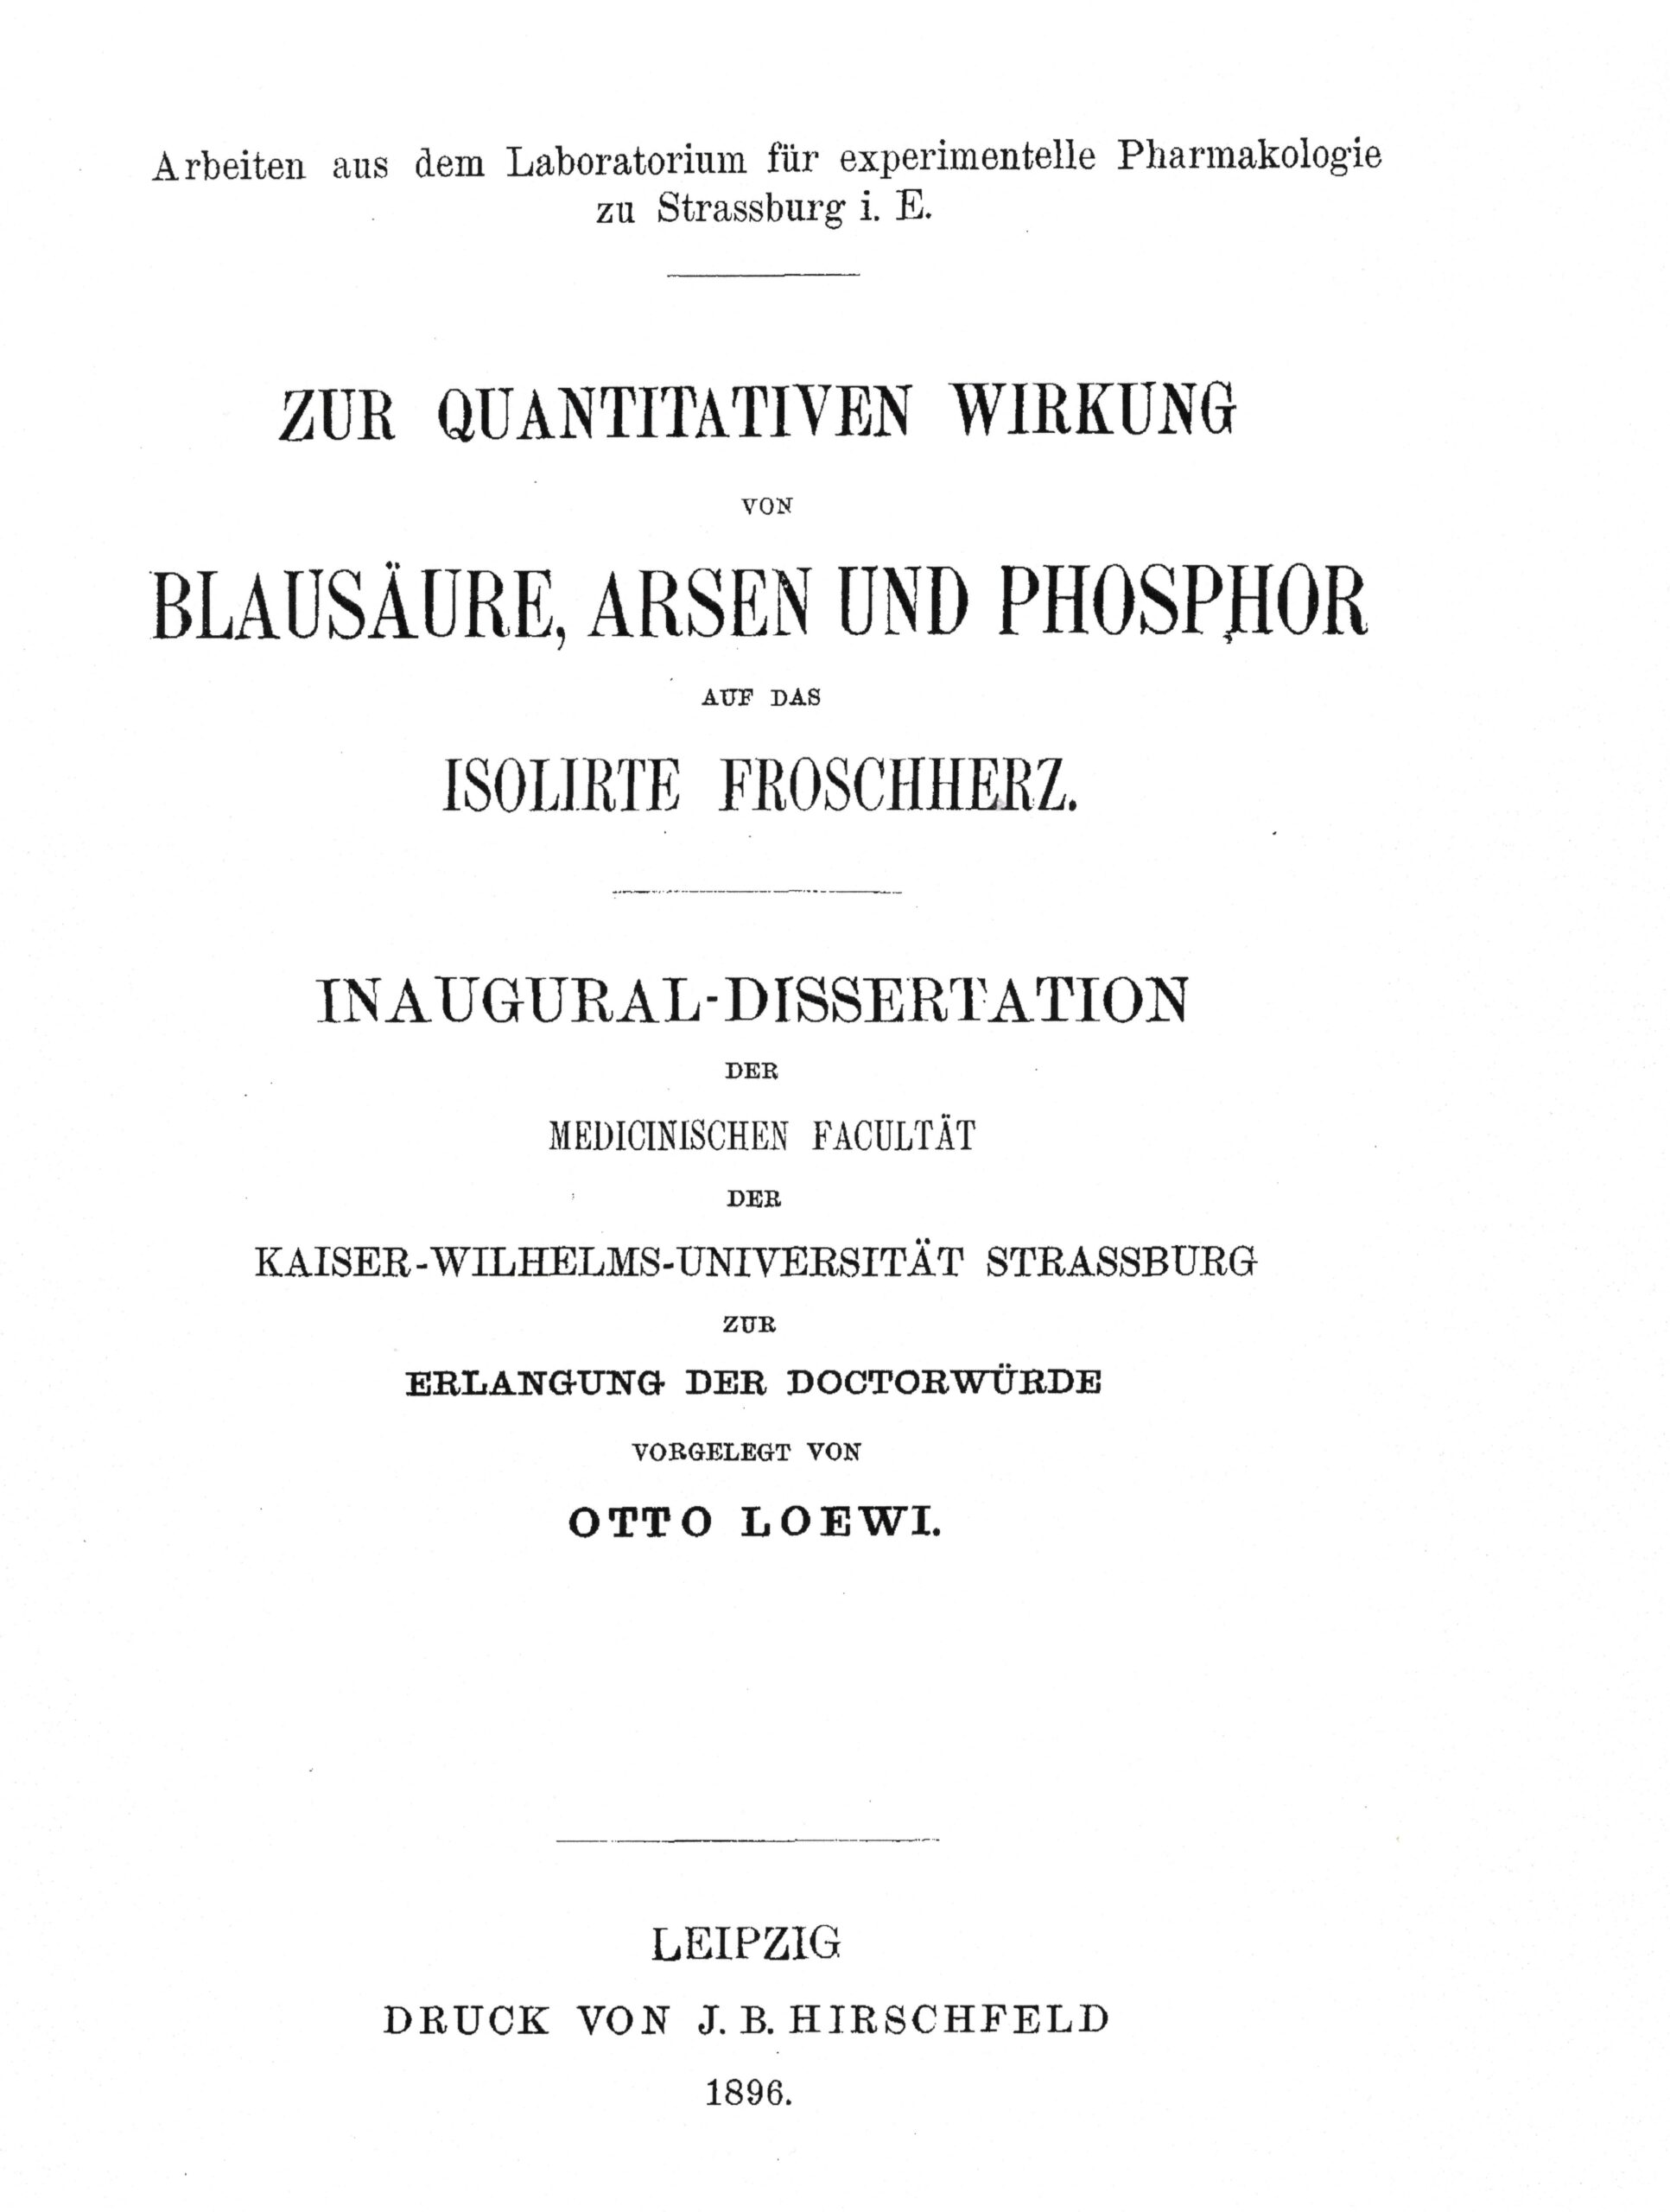 Dissertation, Straßburg 1896, Kopie des Titelblatts, Archiv H Je